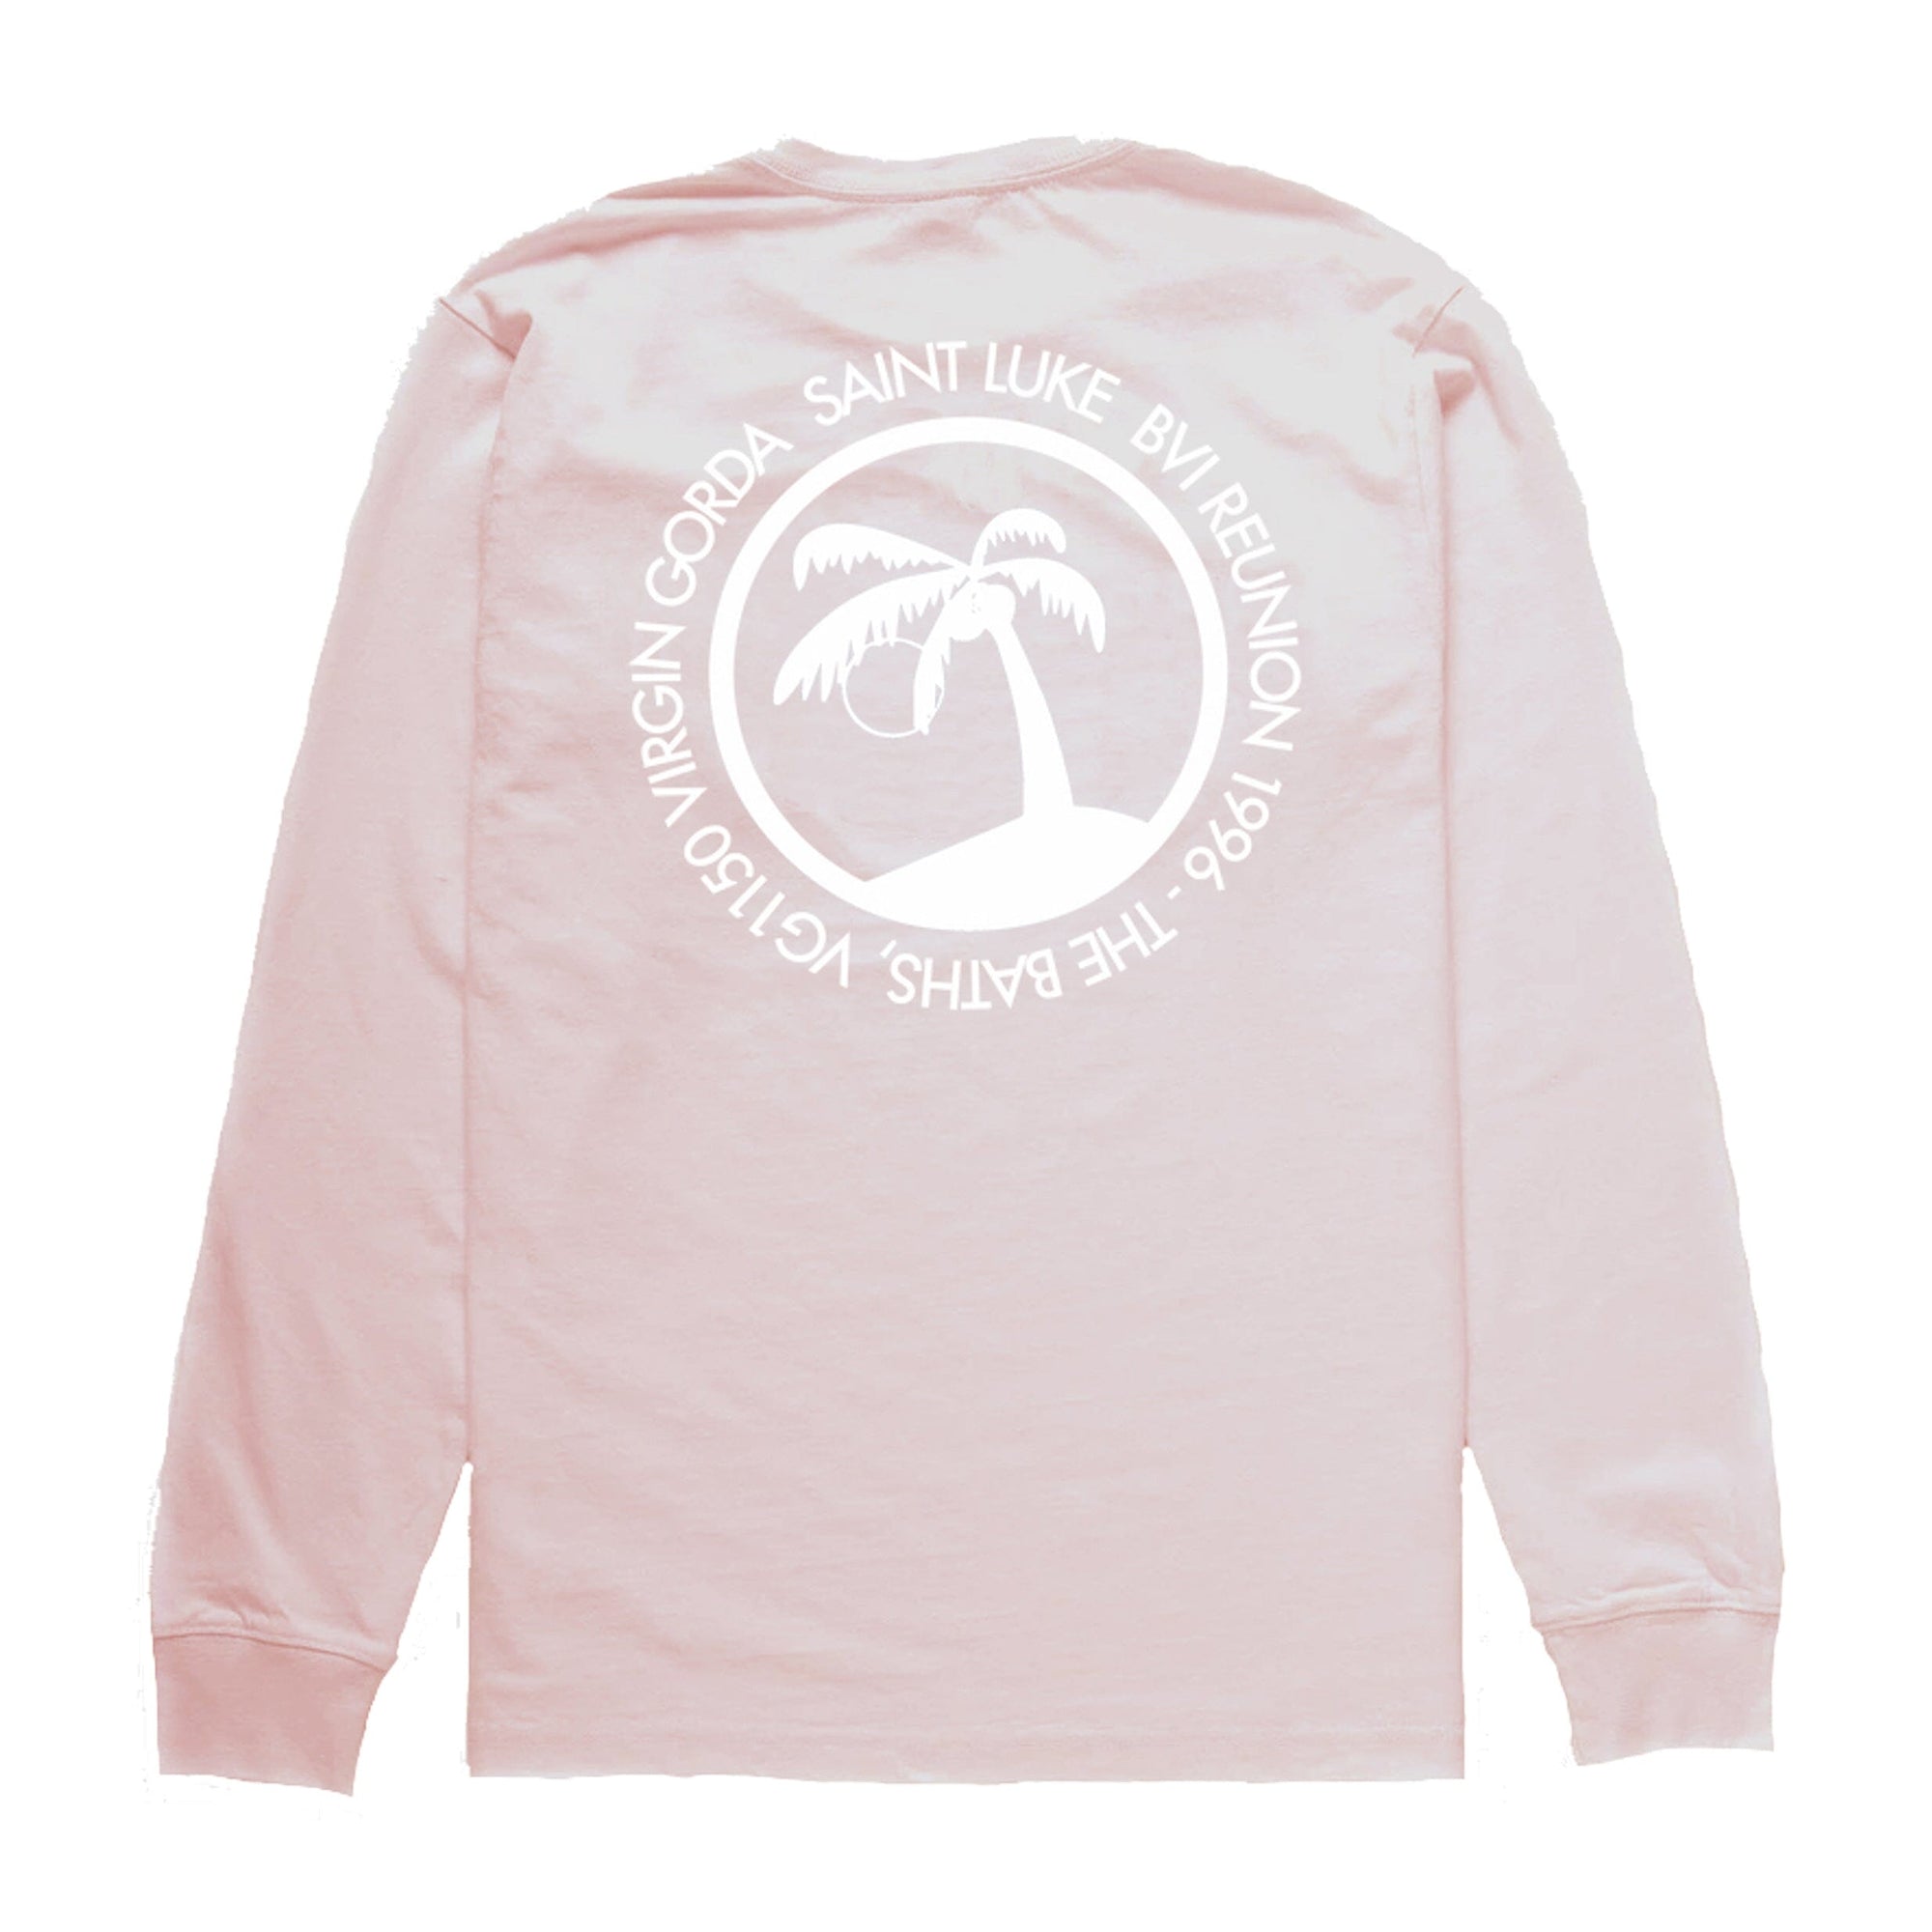 Saint Luke Long Sleeved BVI Reunion T-Shirt in Pink